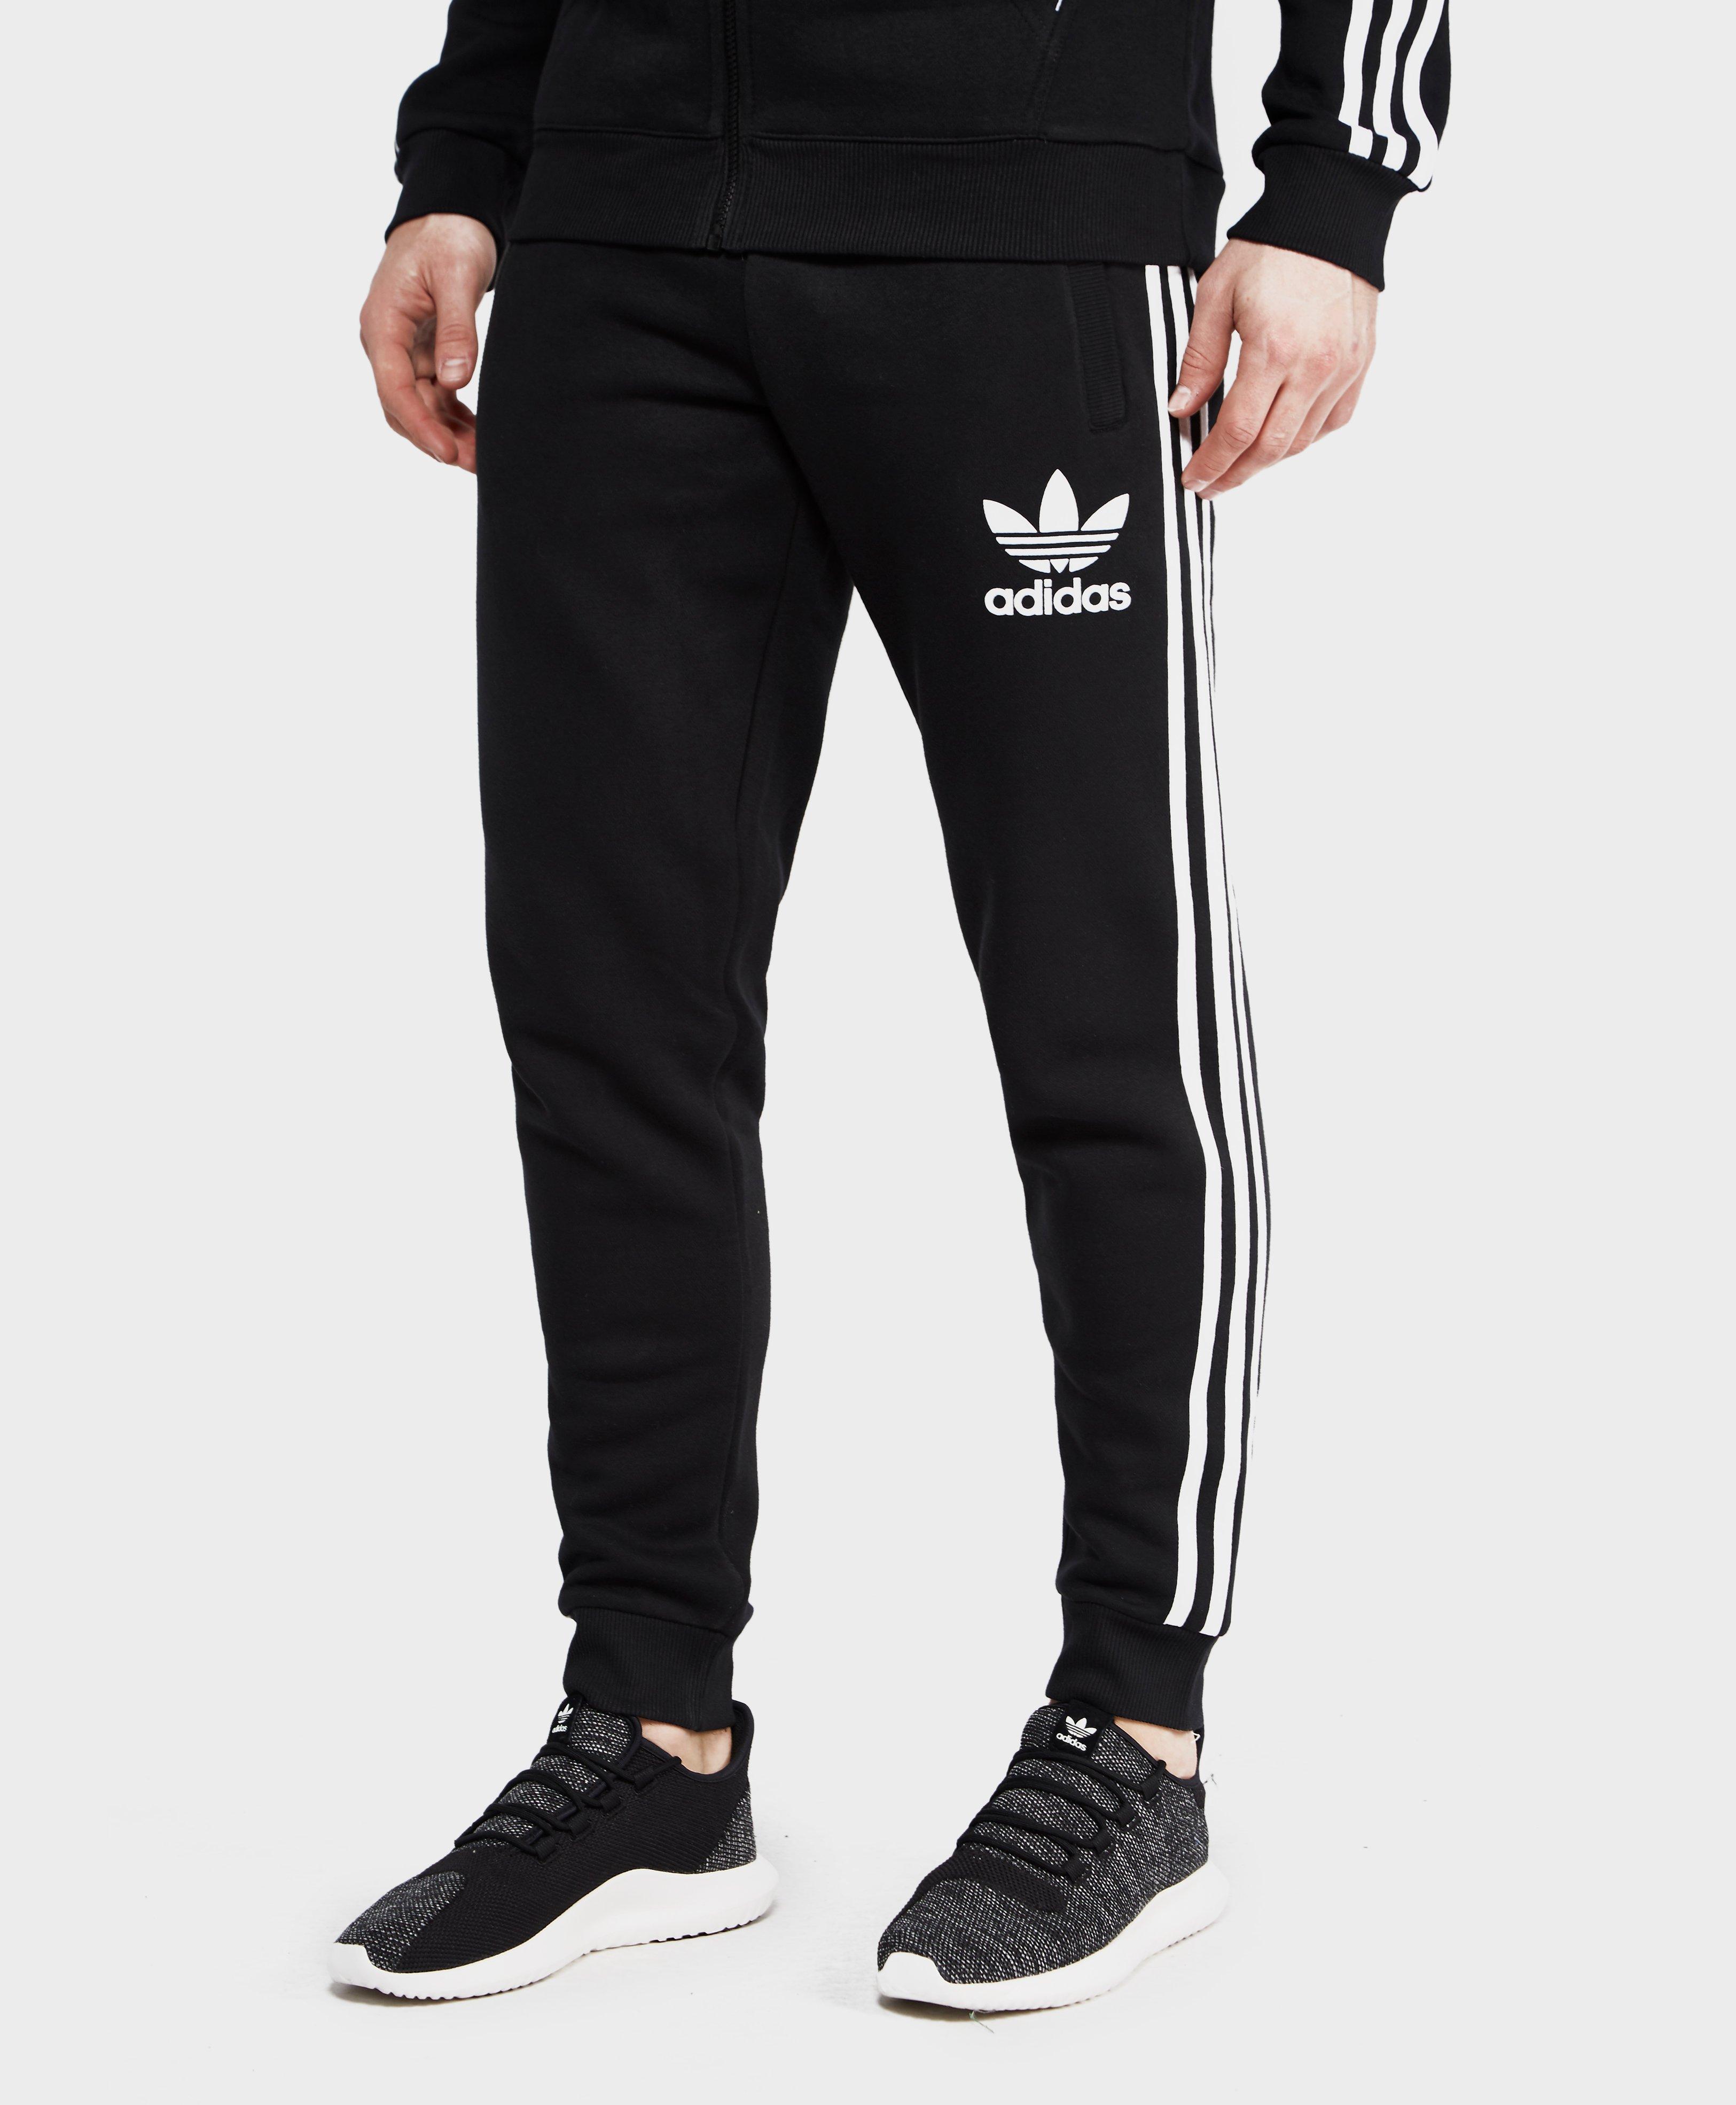 Lyst Adidas Originals California Pants in Black for Men